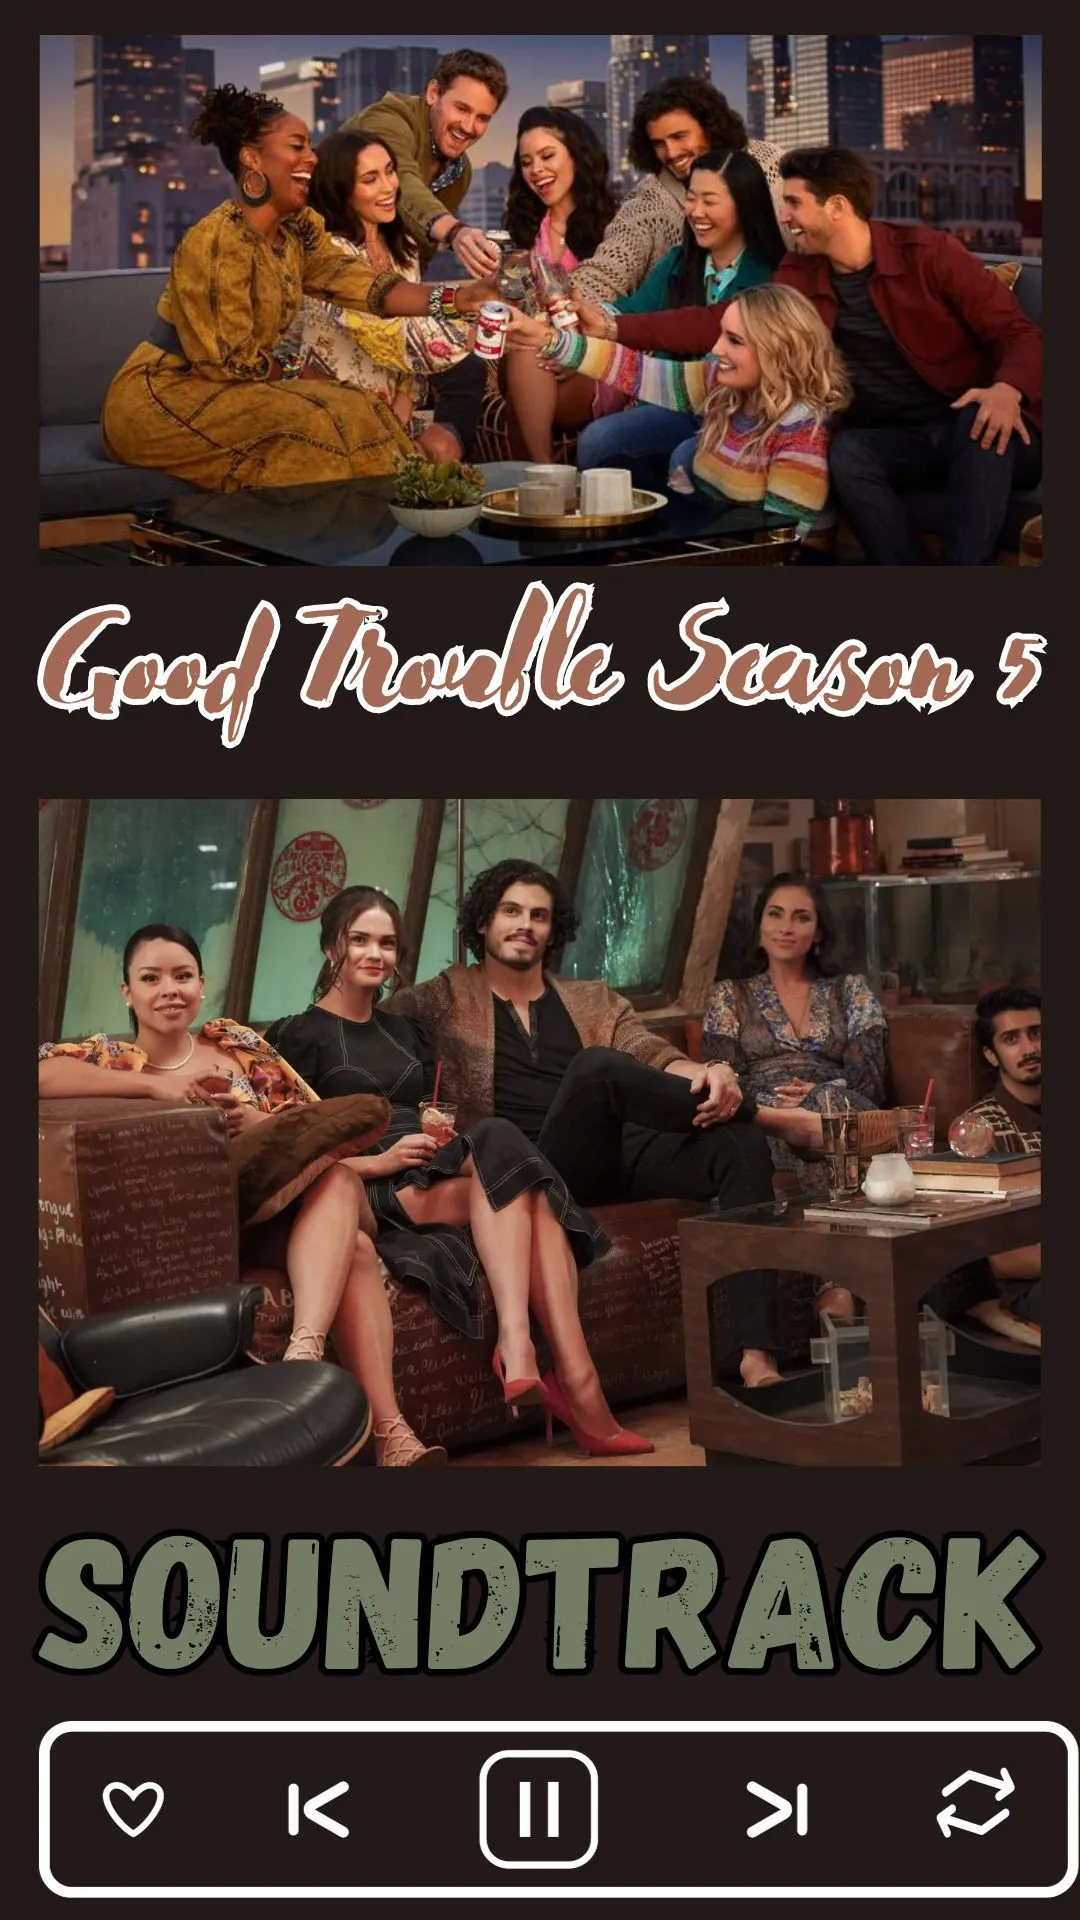 Good Trouble Season 5 Soundtrack